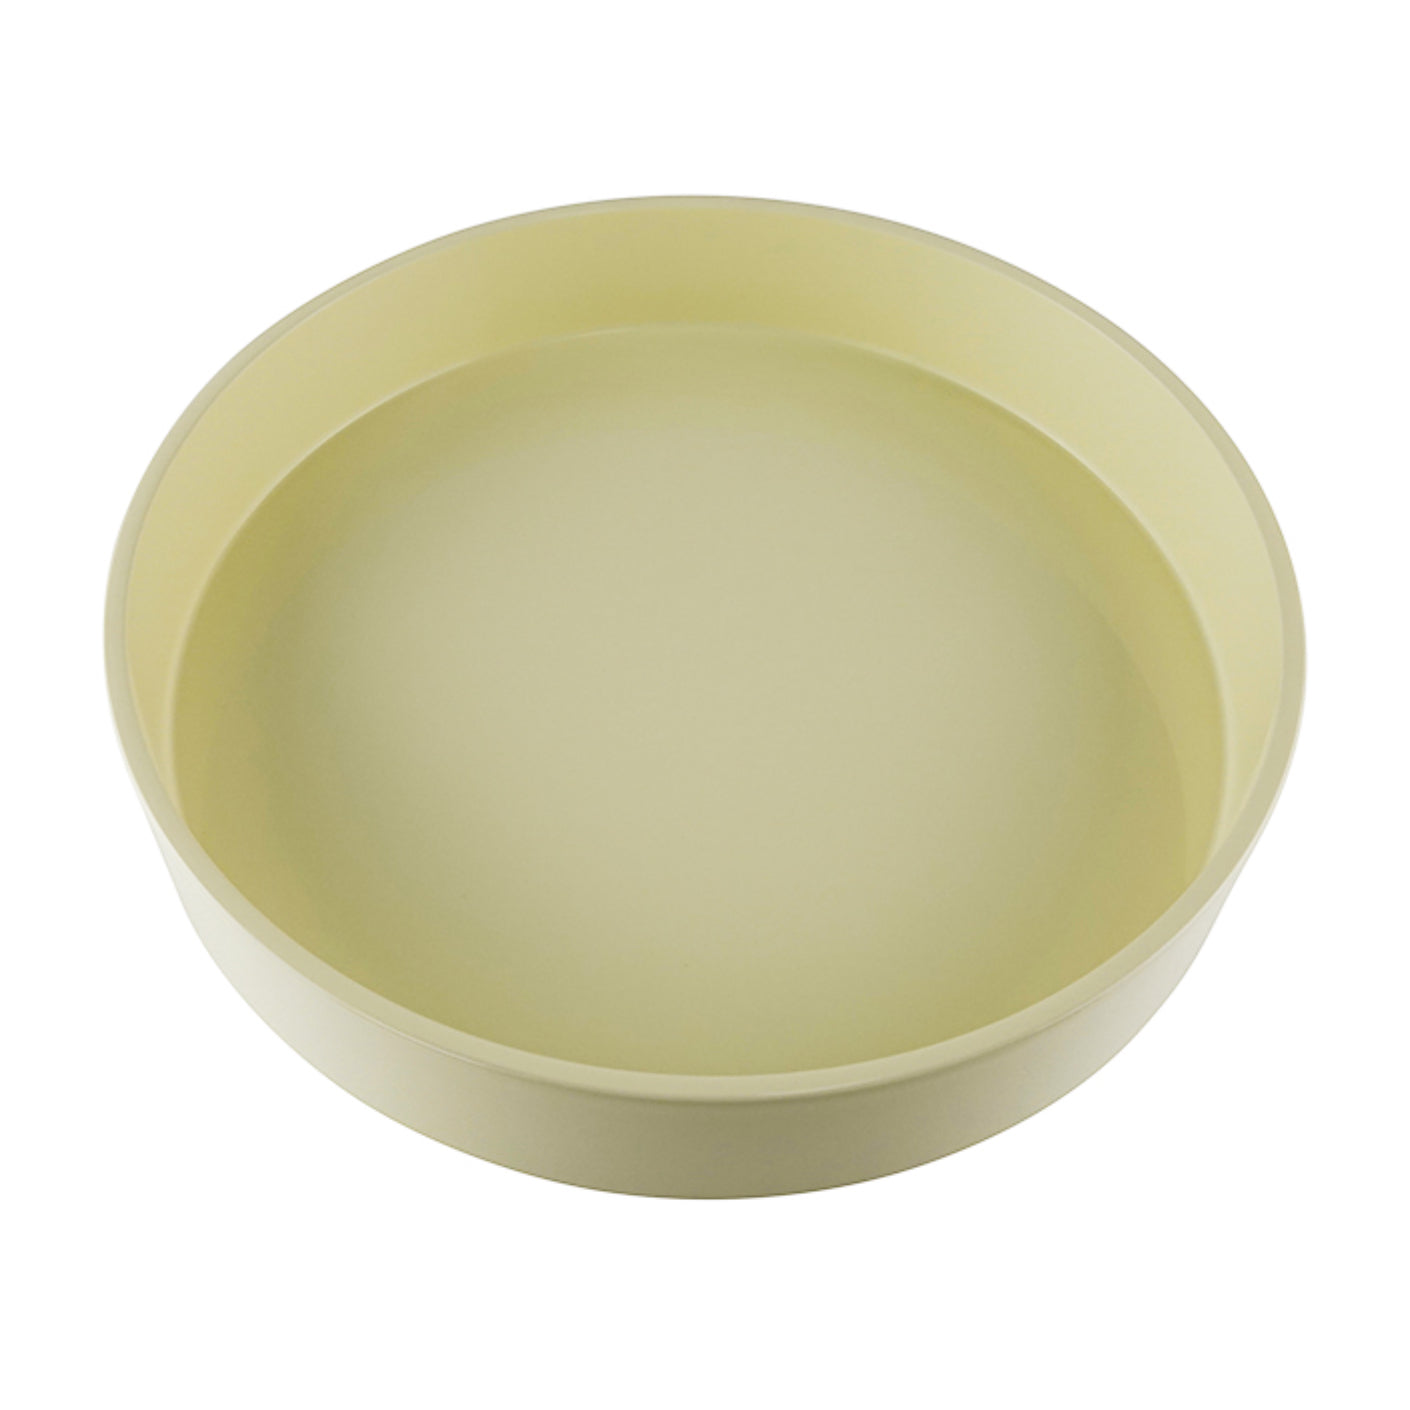 Basic round basin (plastic) white